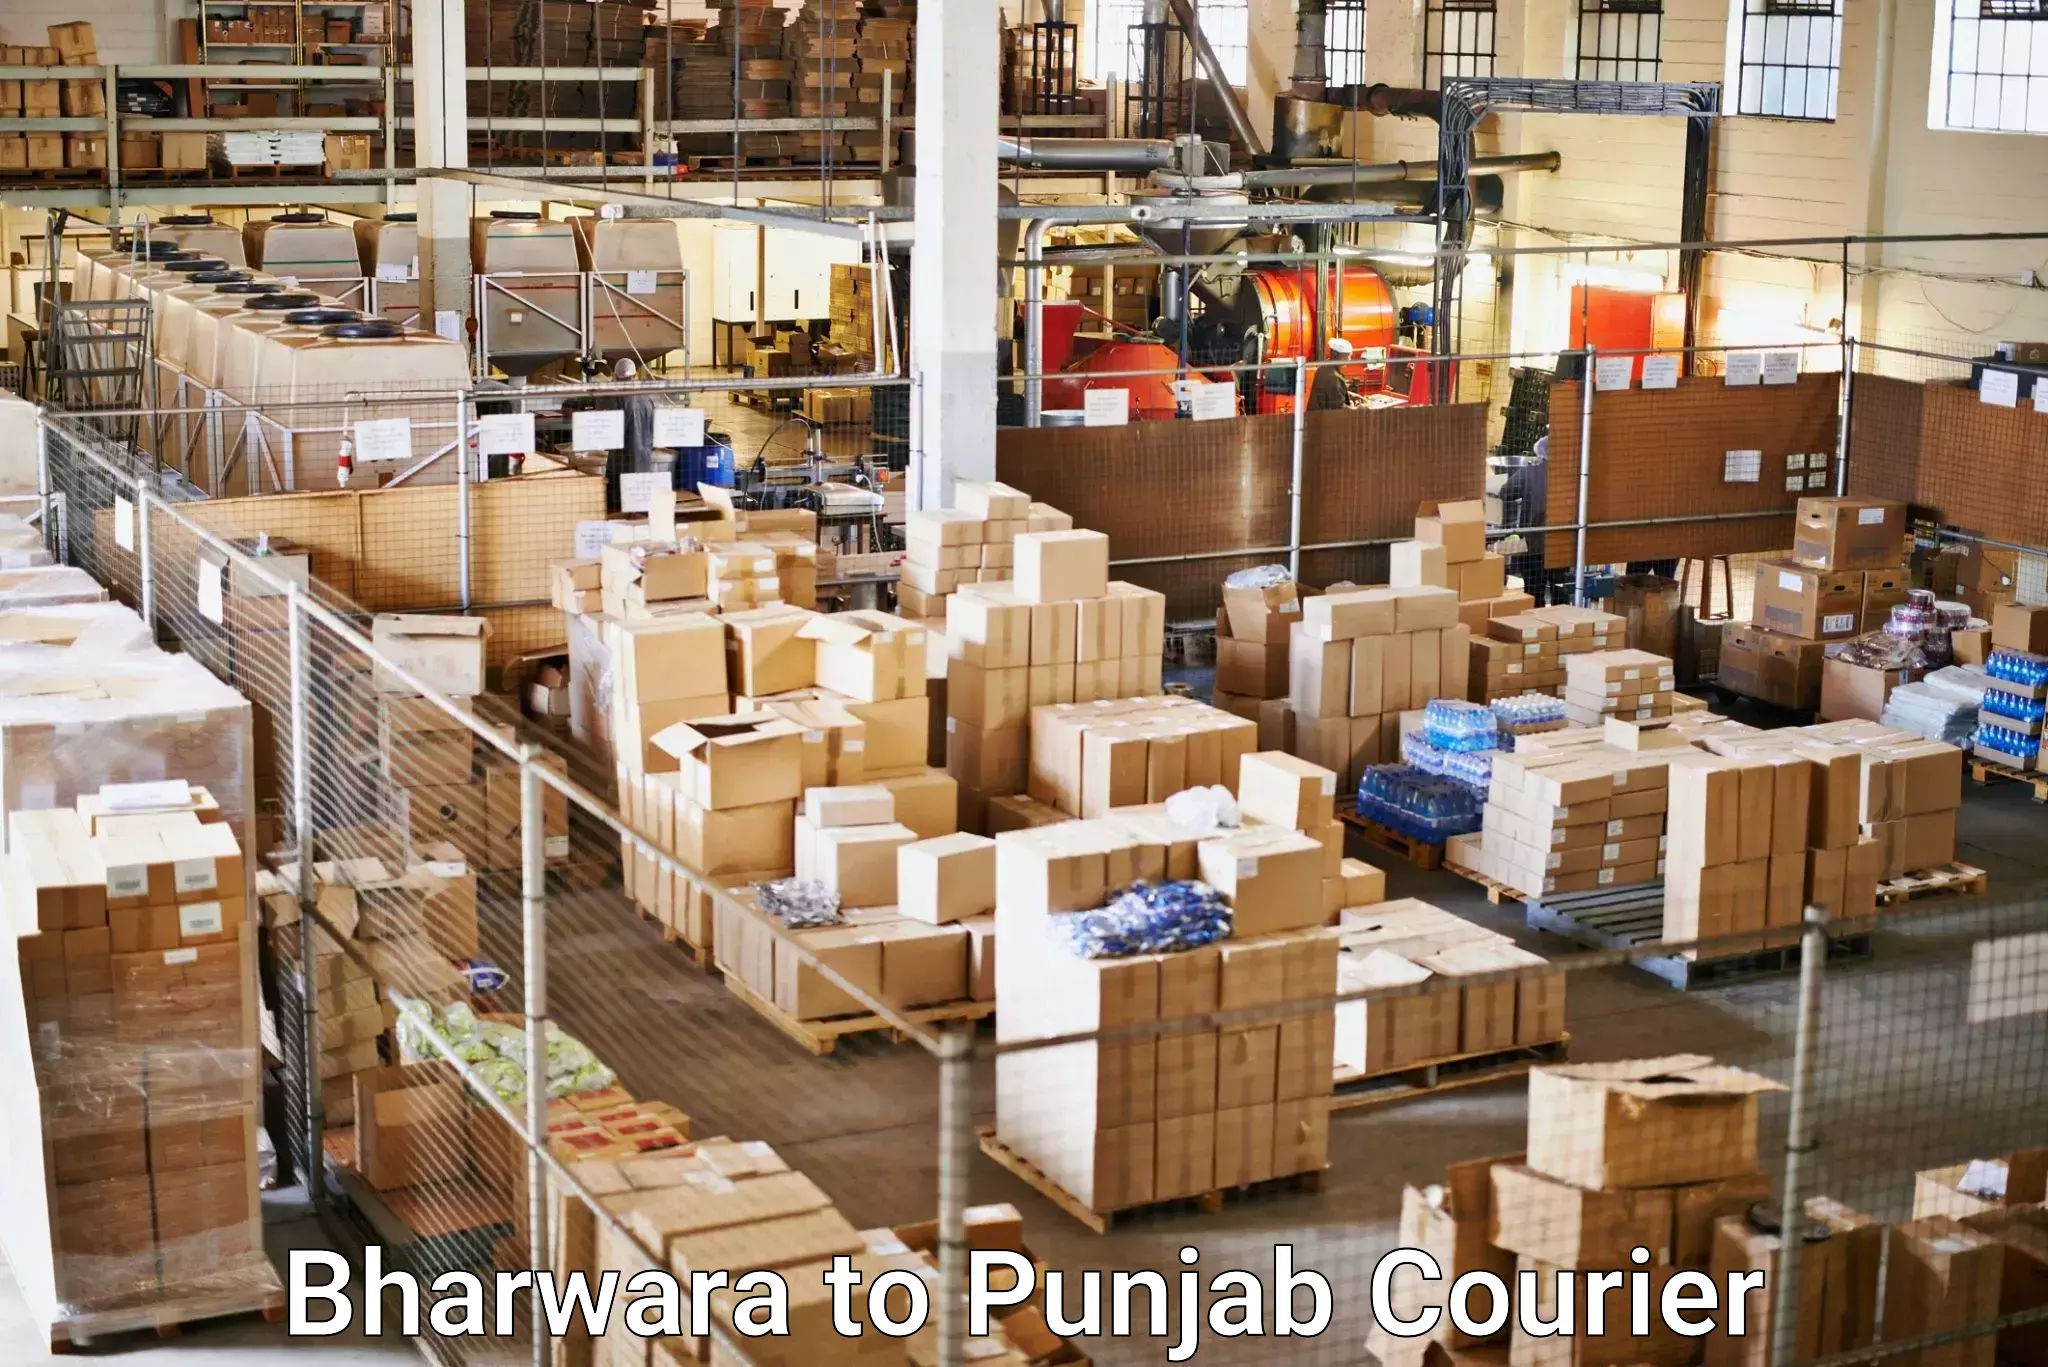 Express logistics providers Bharwara to Jalandhar